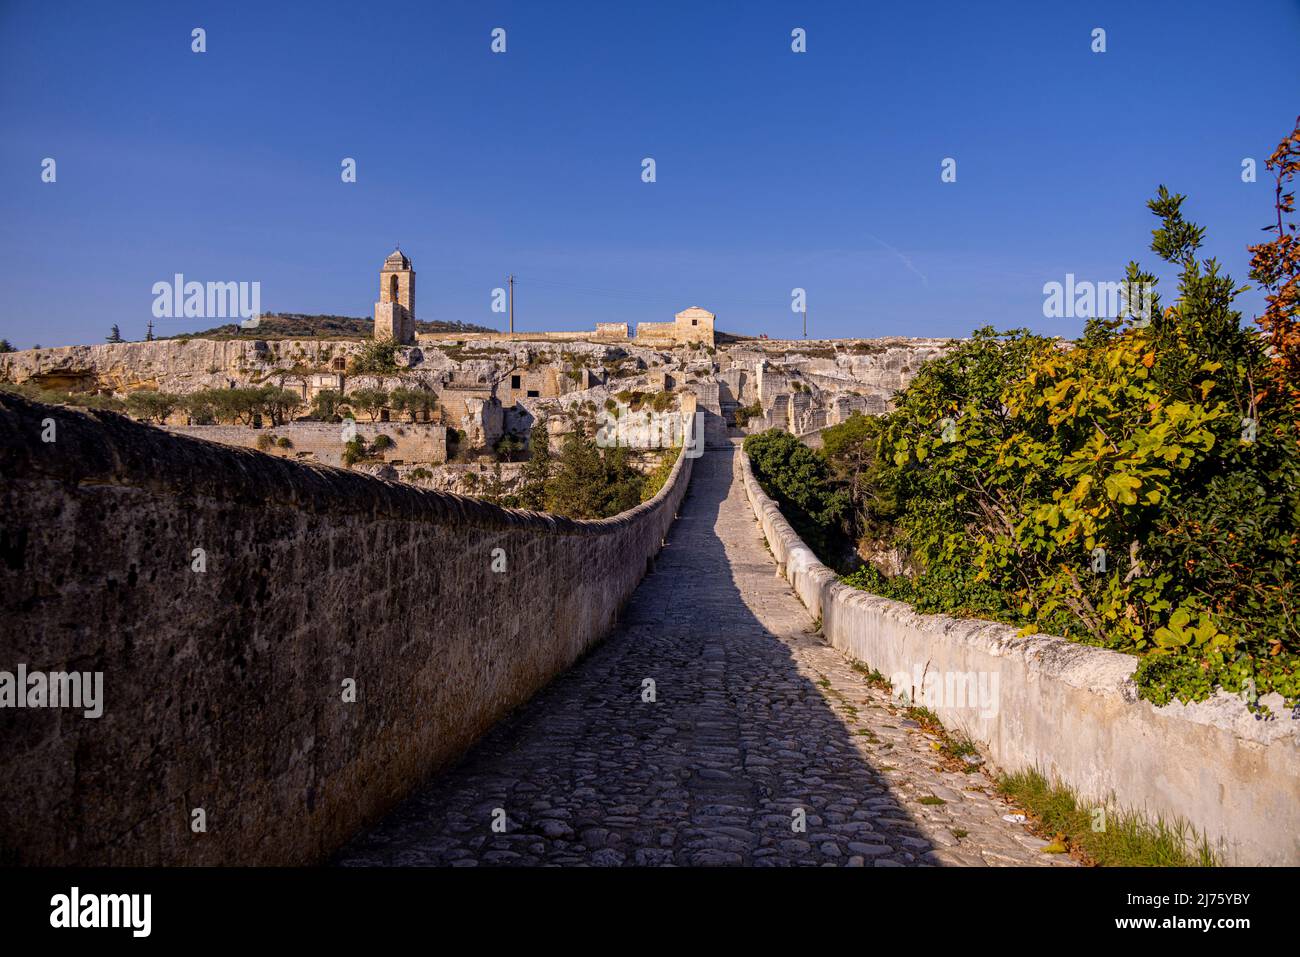 The historic village of Gravina in Puglia with its famous aqueduct bridge, Stock Photo